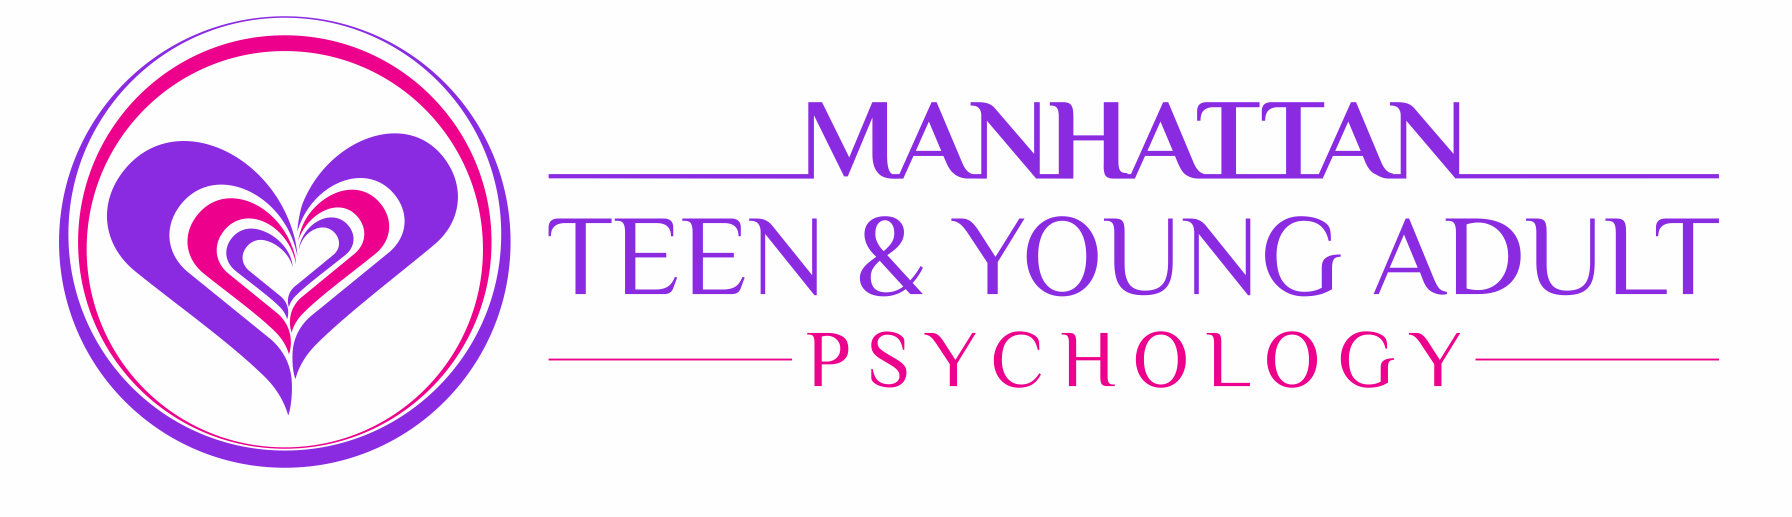 Manhattan Teen & Young Adult Psychology